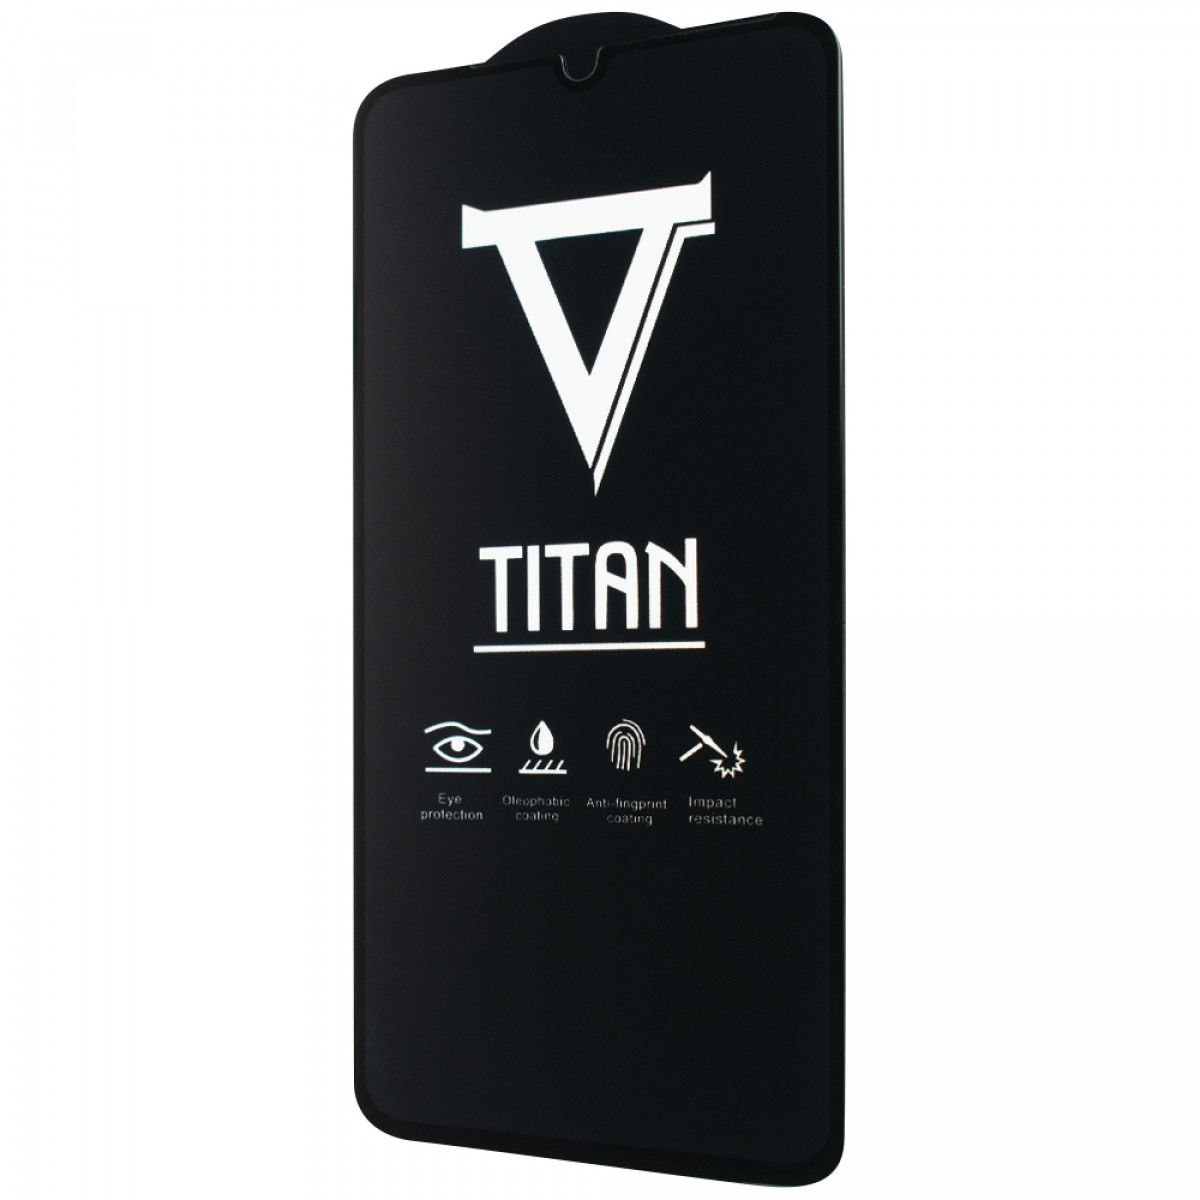 Titan Glass for Xiaomi MI 9 Lite